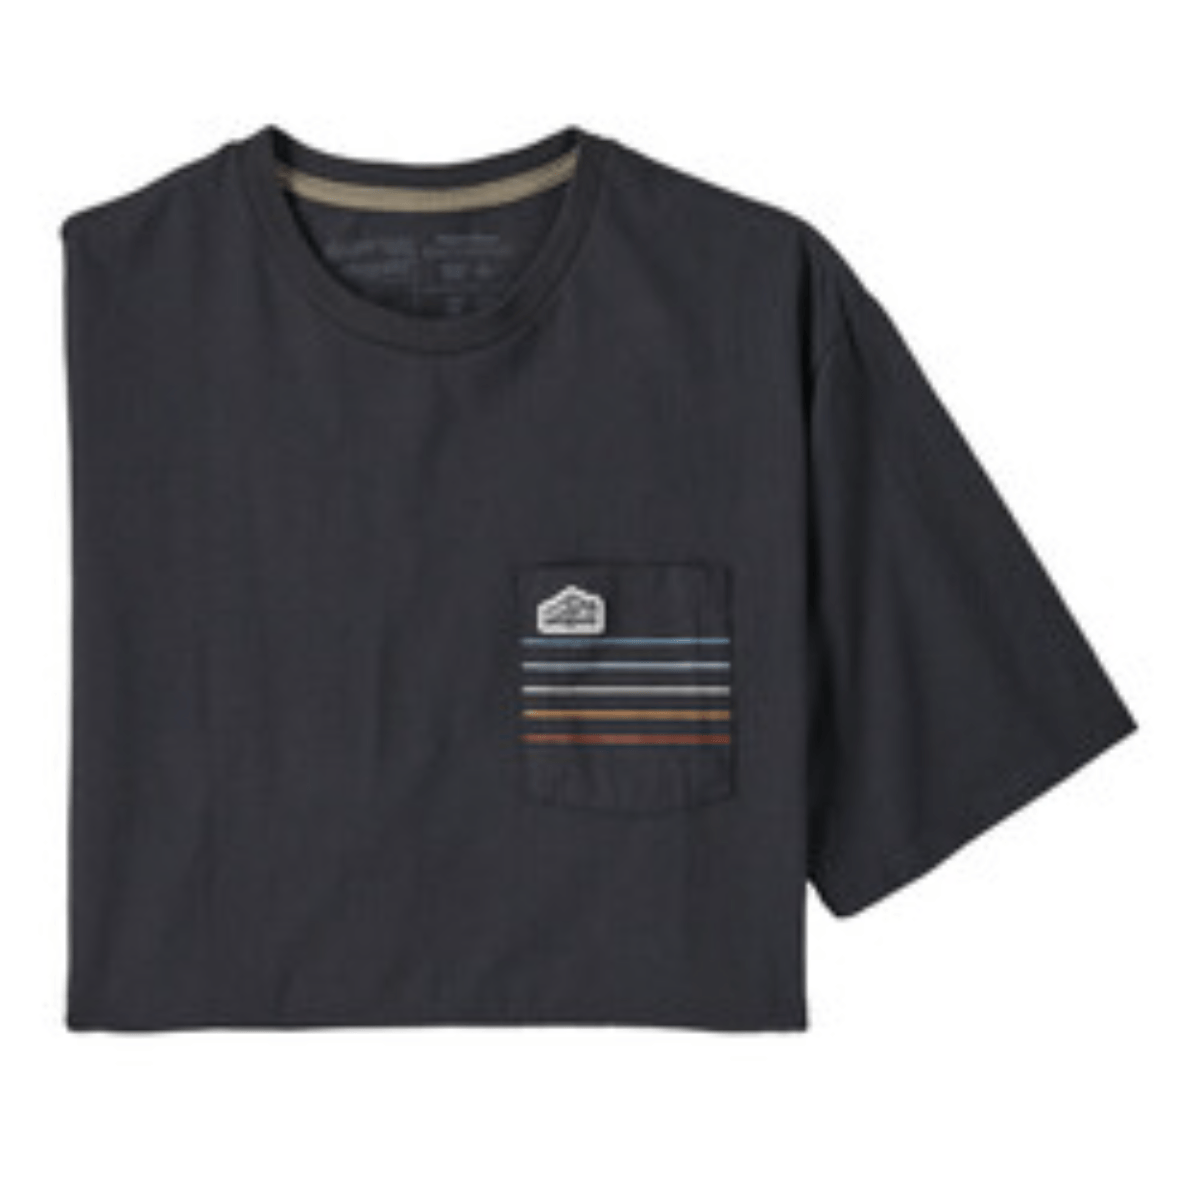 Patagonia Line Logo Ridge Stripe Organic Pocket T-Shirt - Men's Oar Tan S